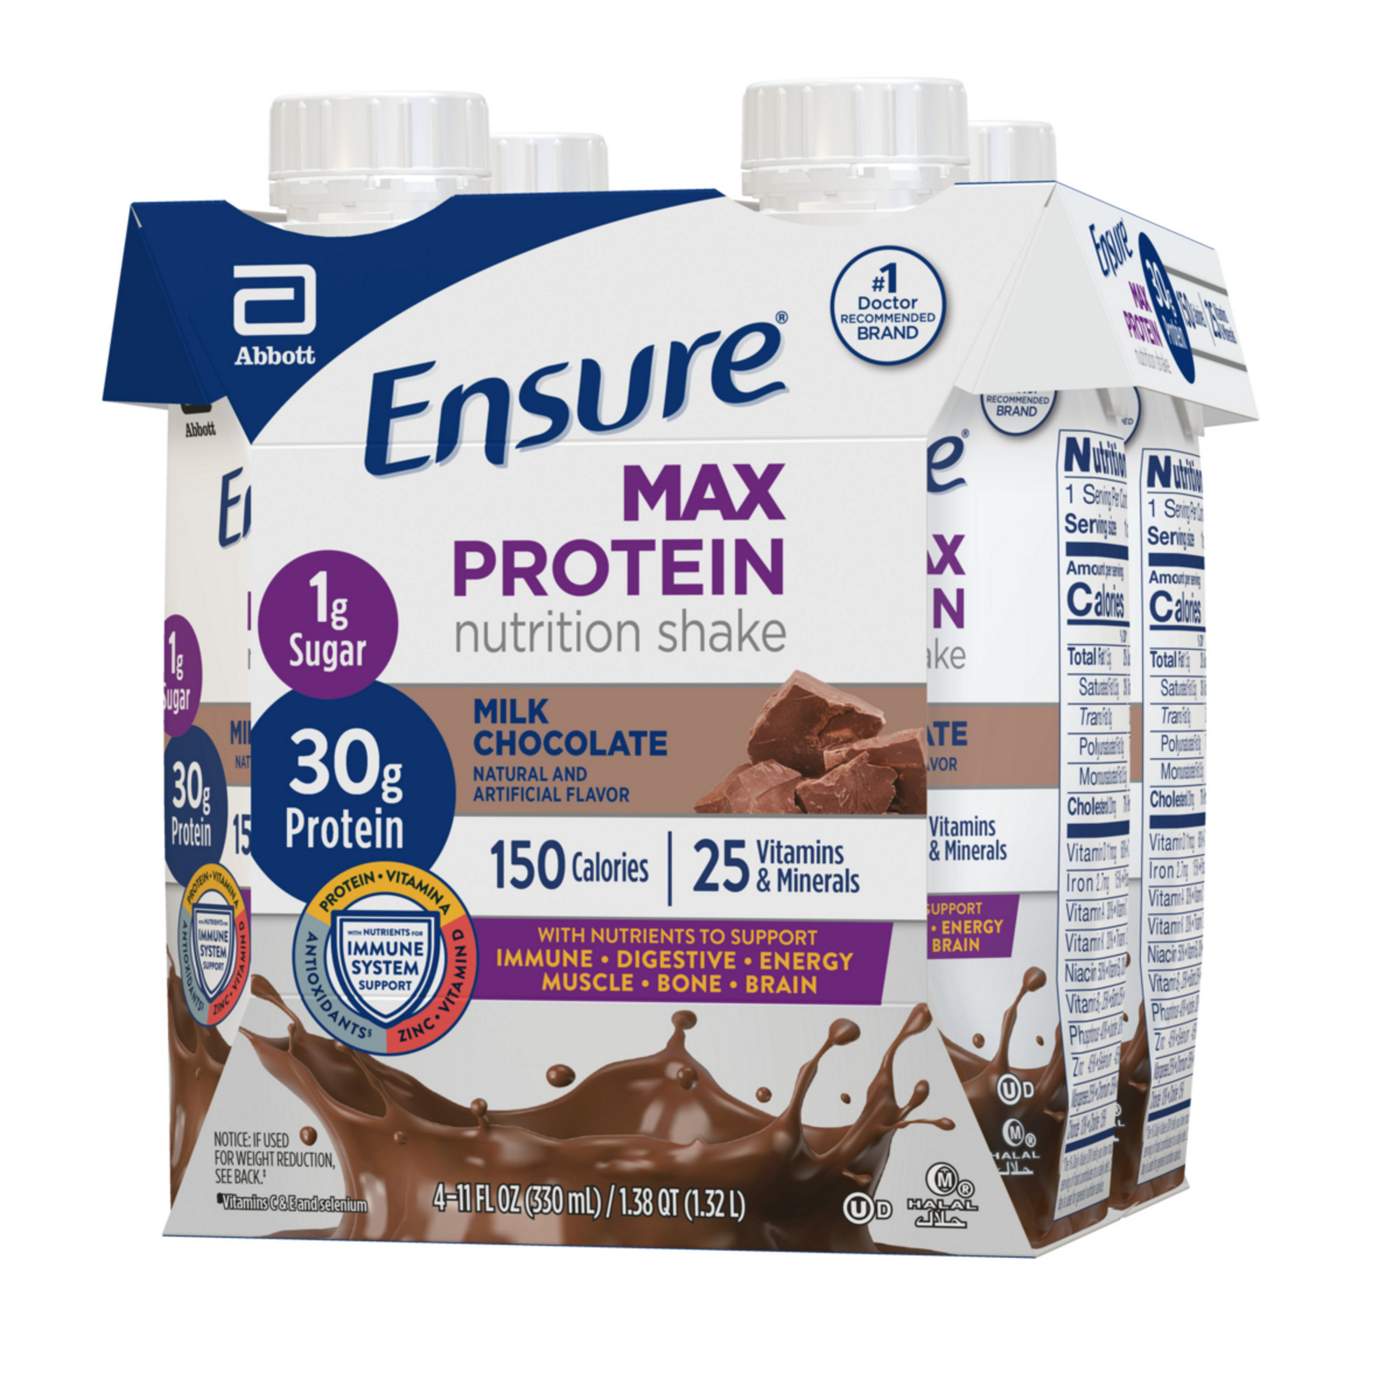 Ensure Max Protein Nutrition Shake Milk Chocolate; image 3 of 13